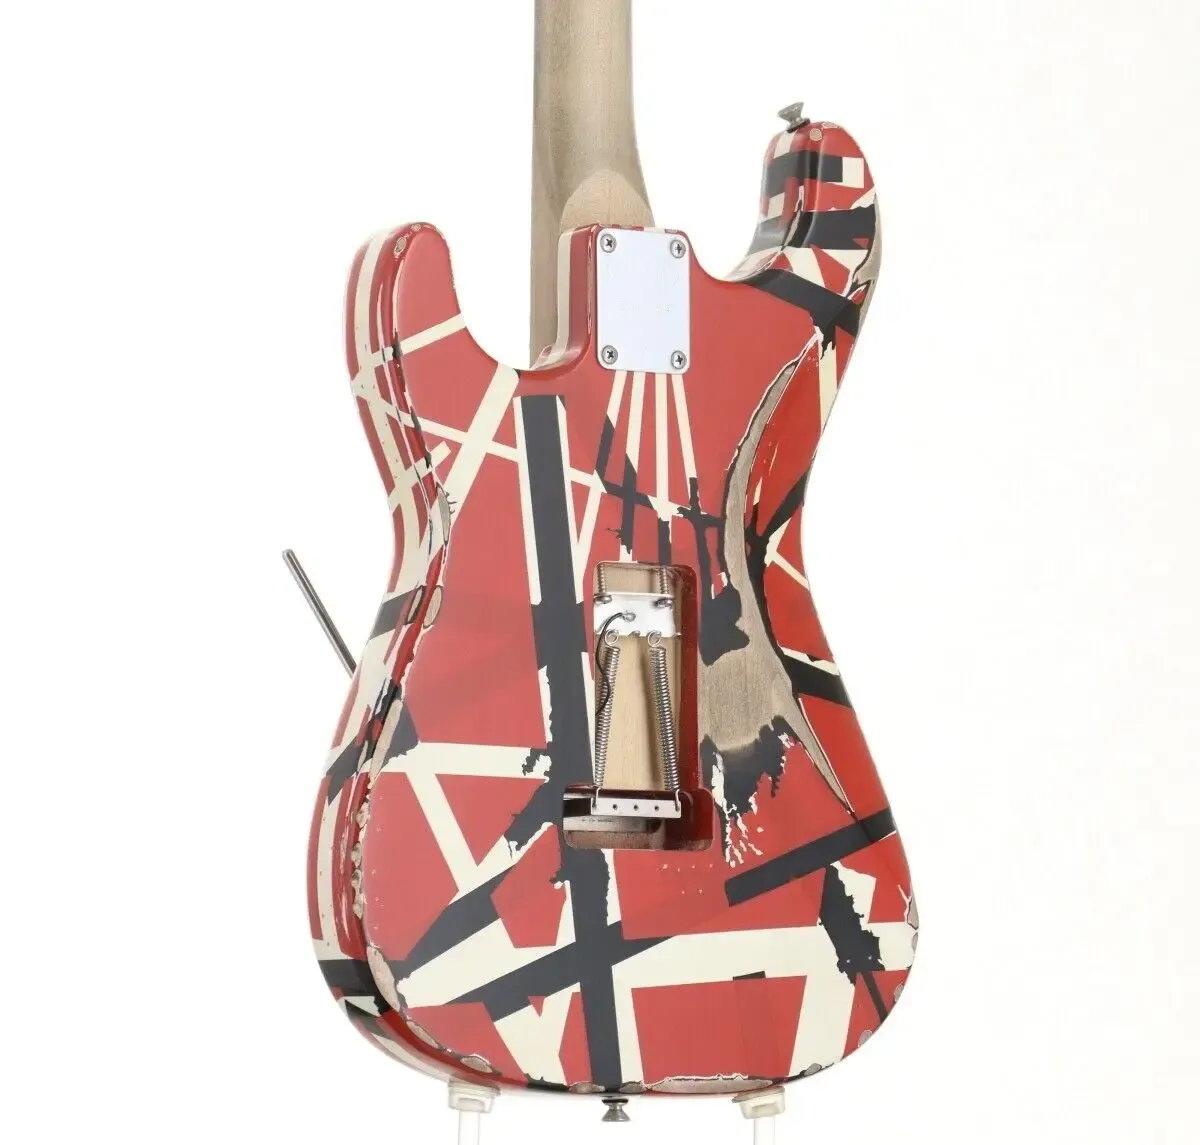 Ev h Series Series Frankie Red Black White Relic Guitar # 5236